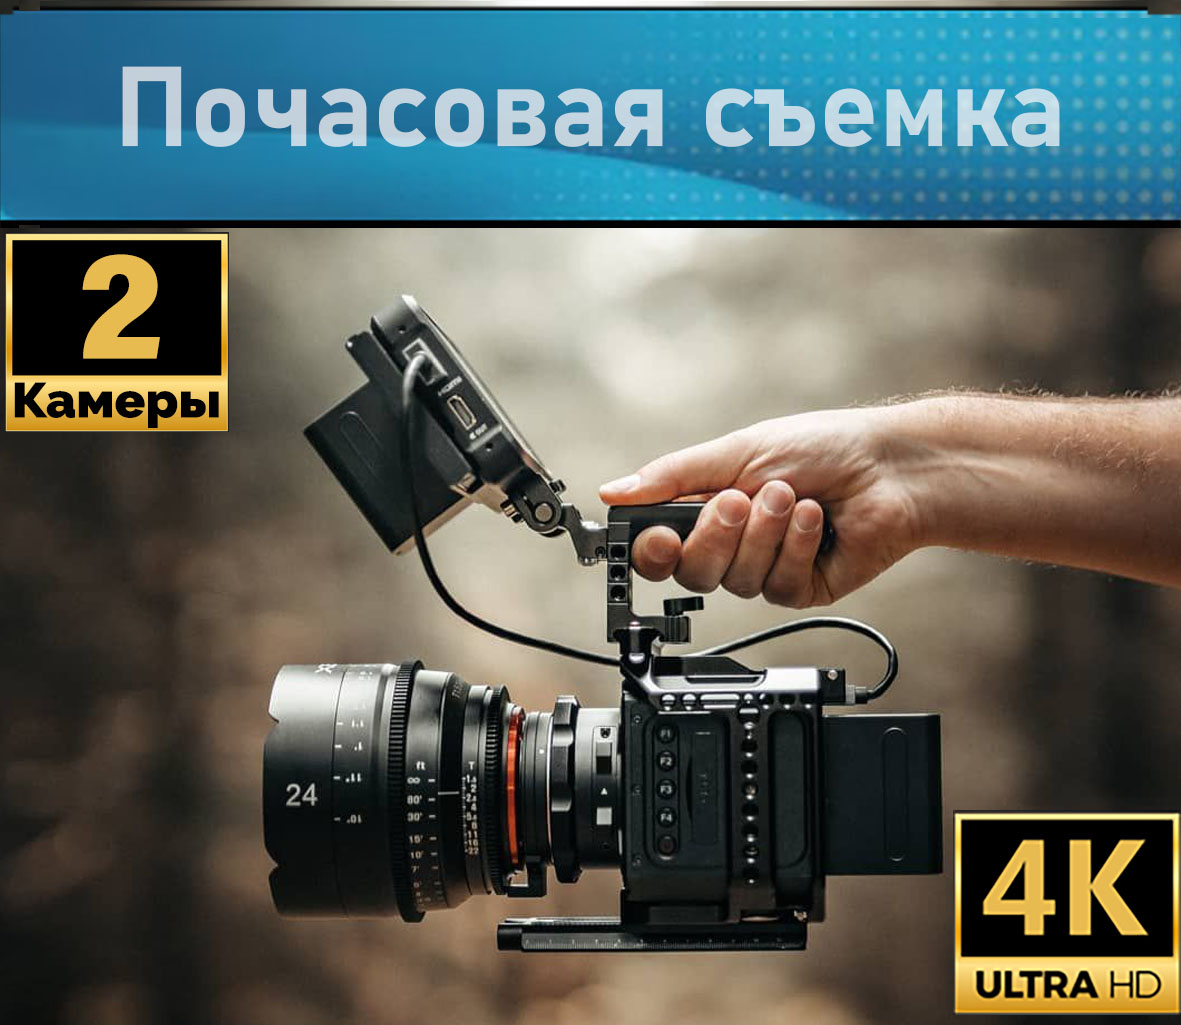 Видеосъемка 4К цена 2 камеры